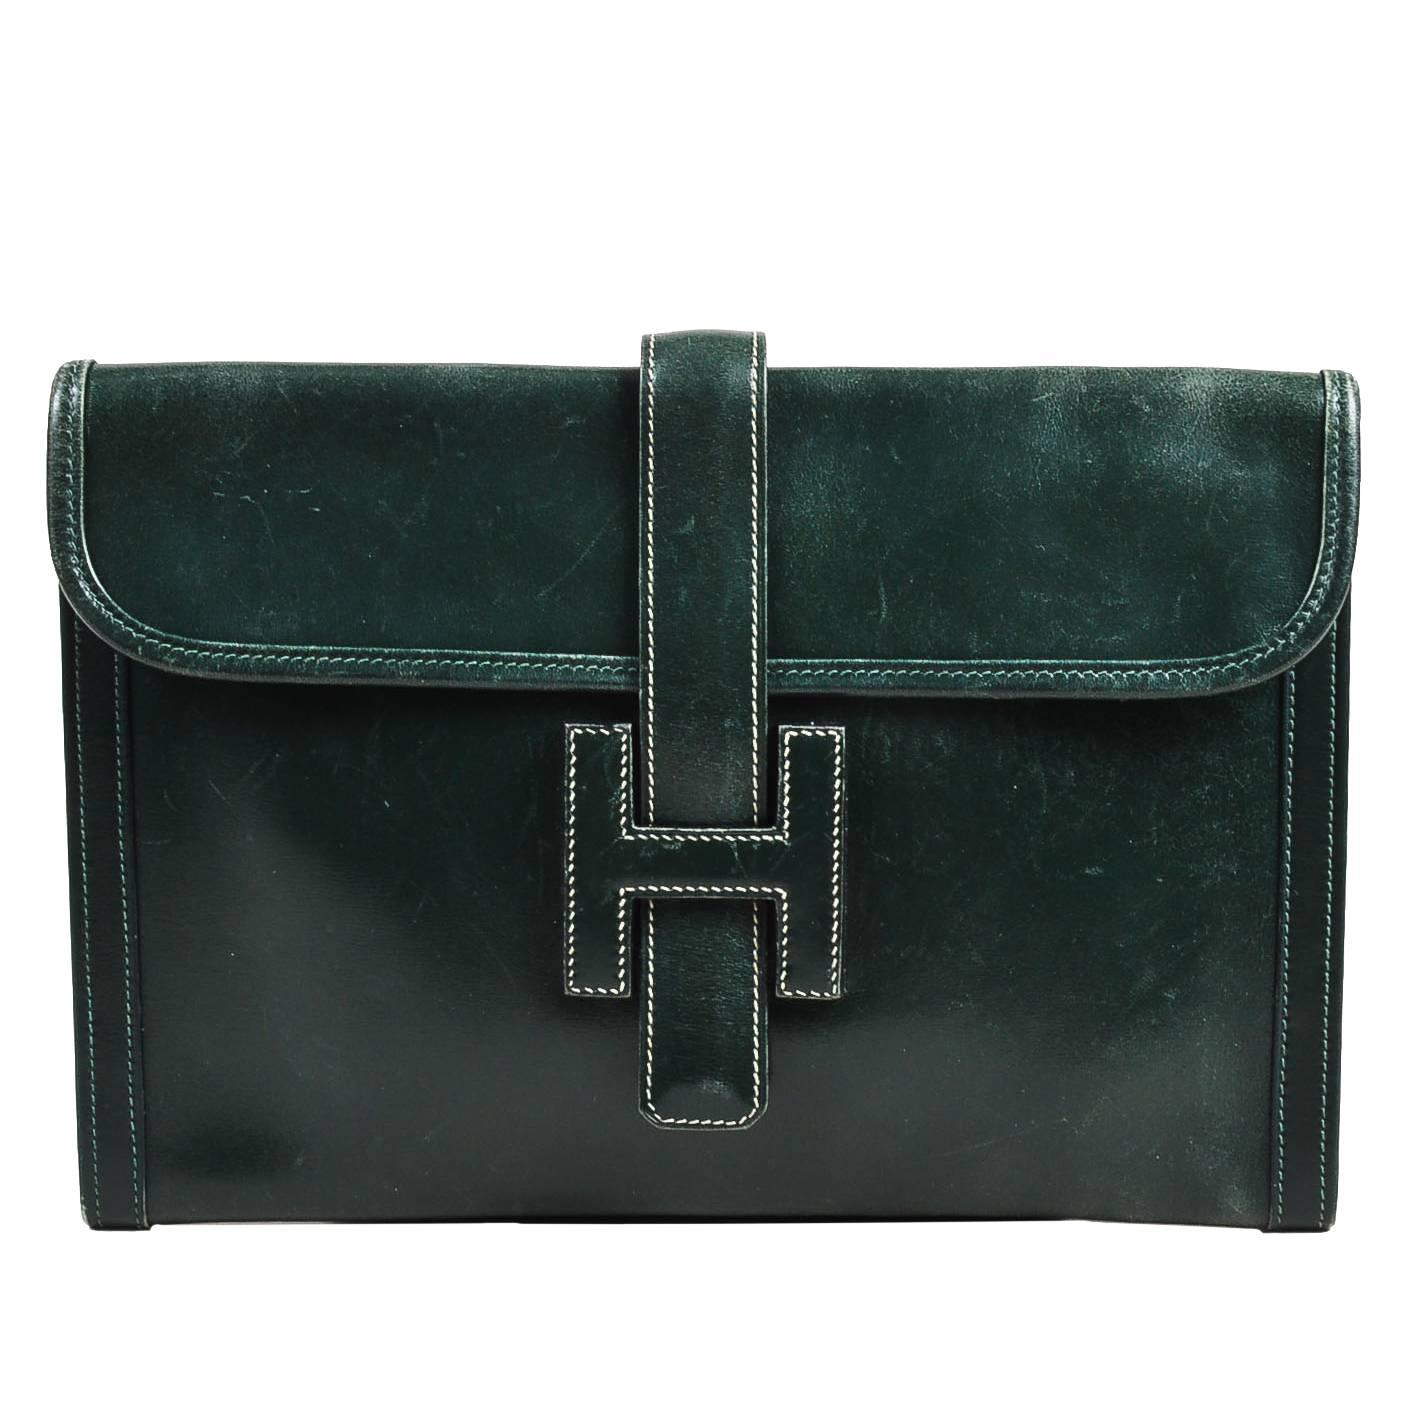 Vintage Hermes Dark Green Leather "Jige PM" Clutch For Sale